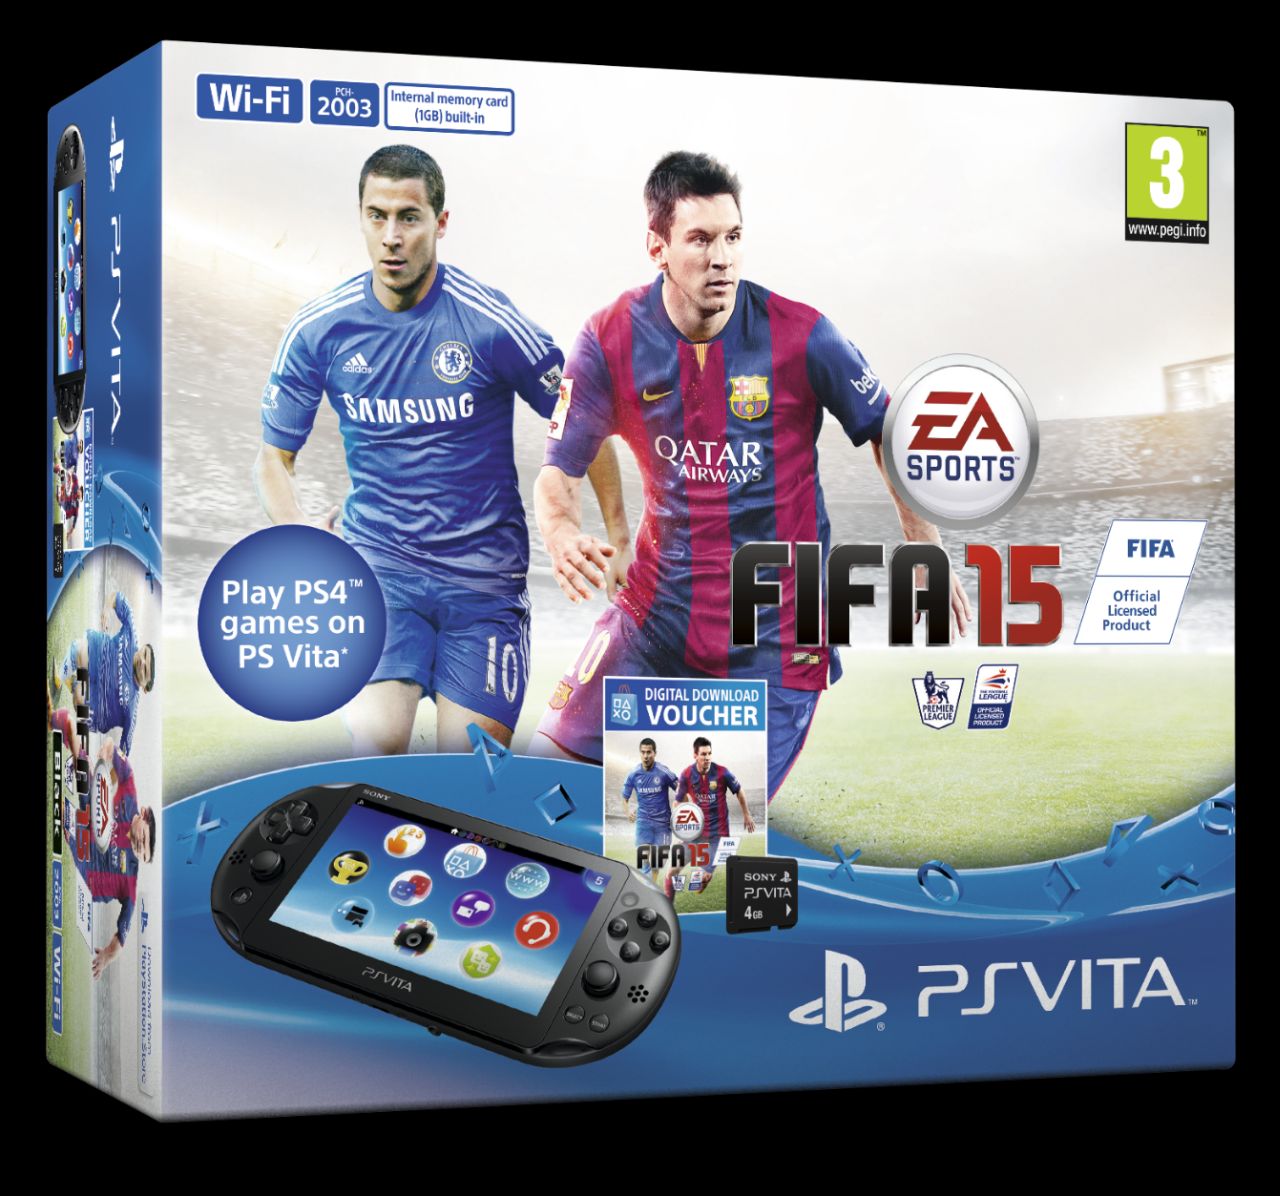 FIFA-15-Gets-PlayStation-Vita-Bundle-on-September-26-in-Europe-Only-458598-2.jpg